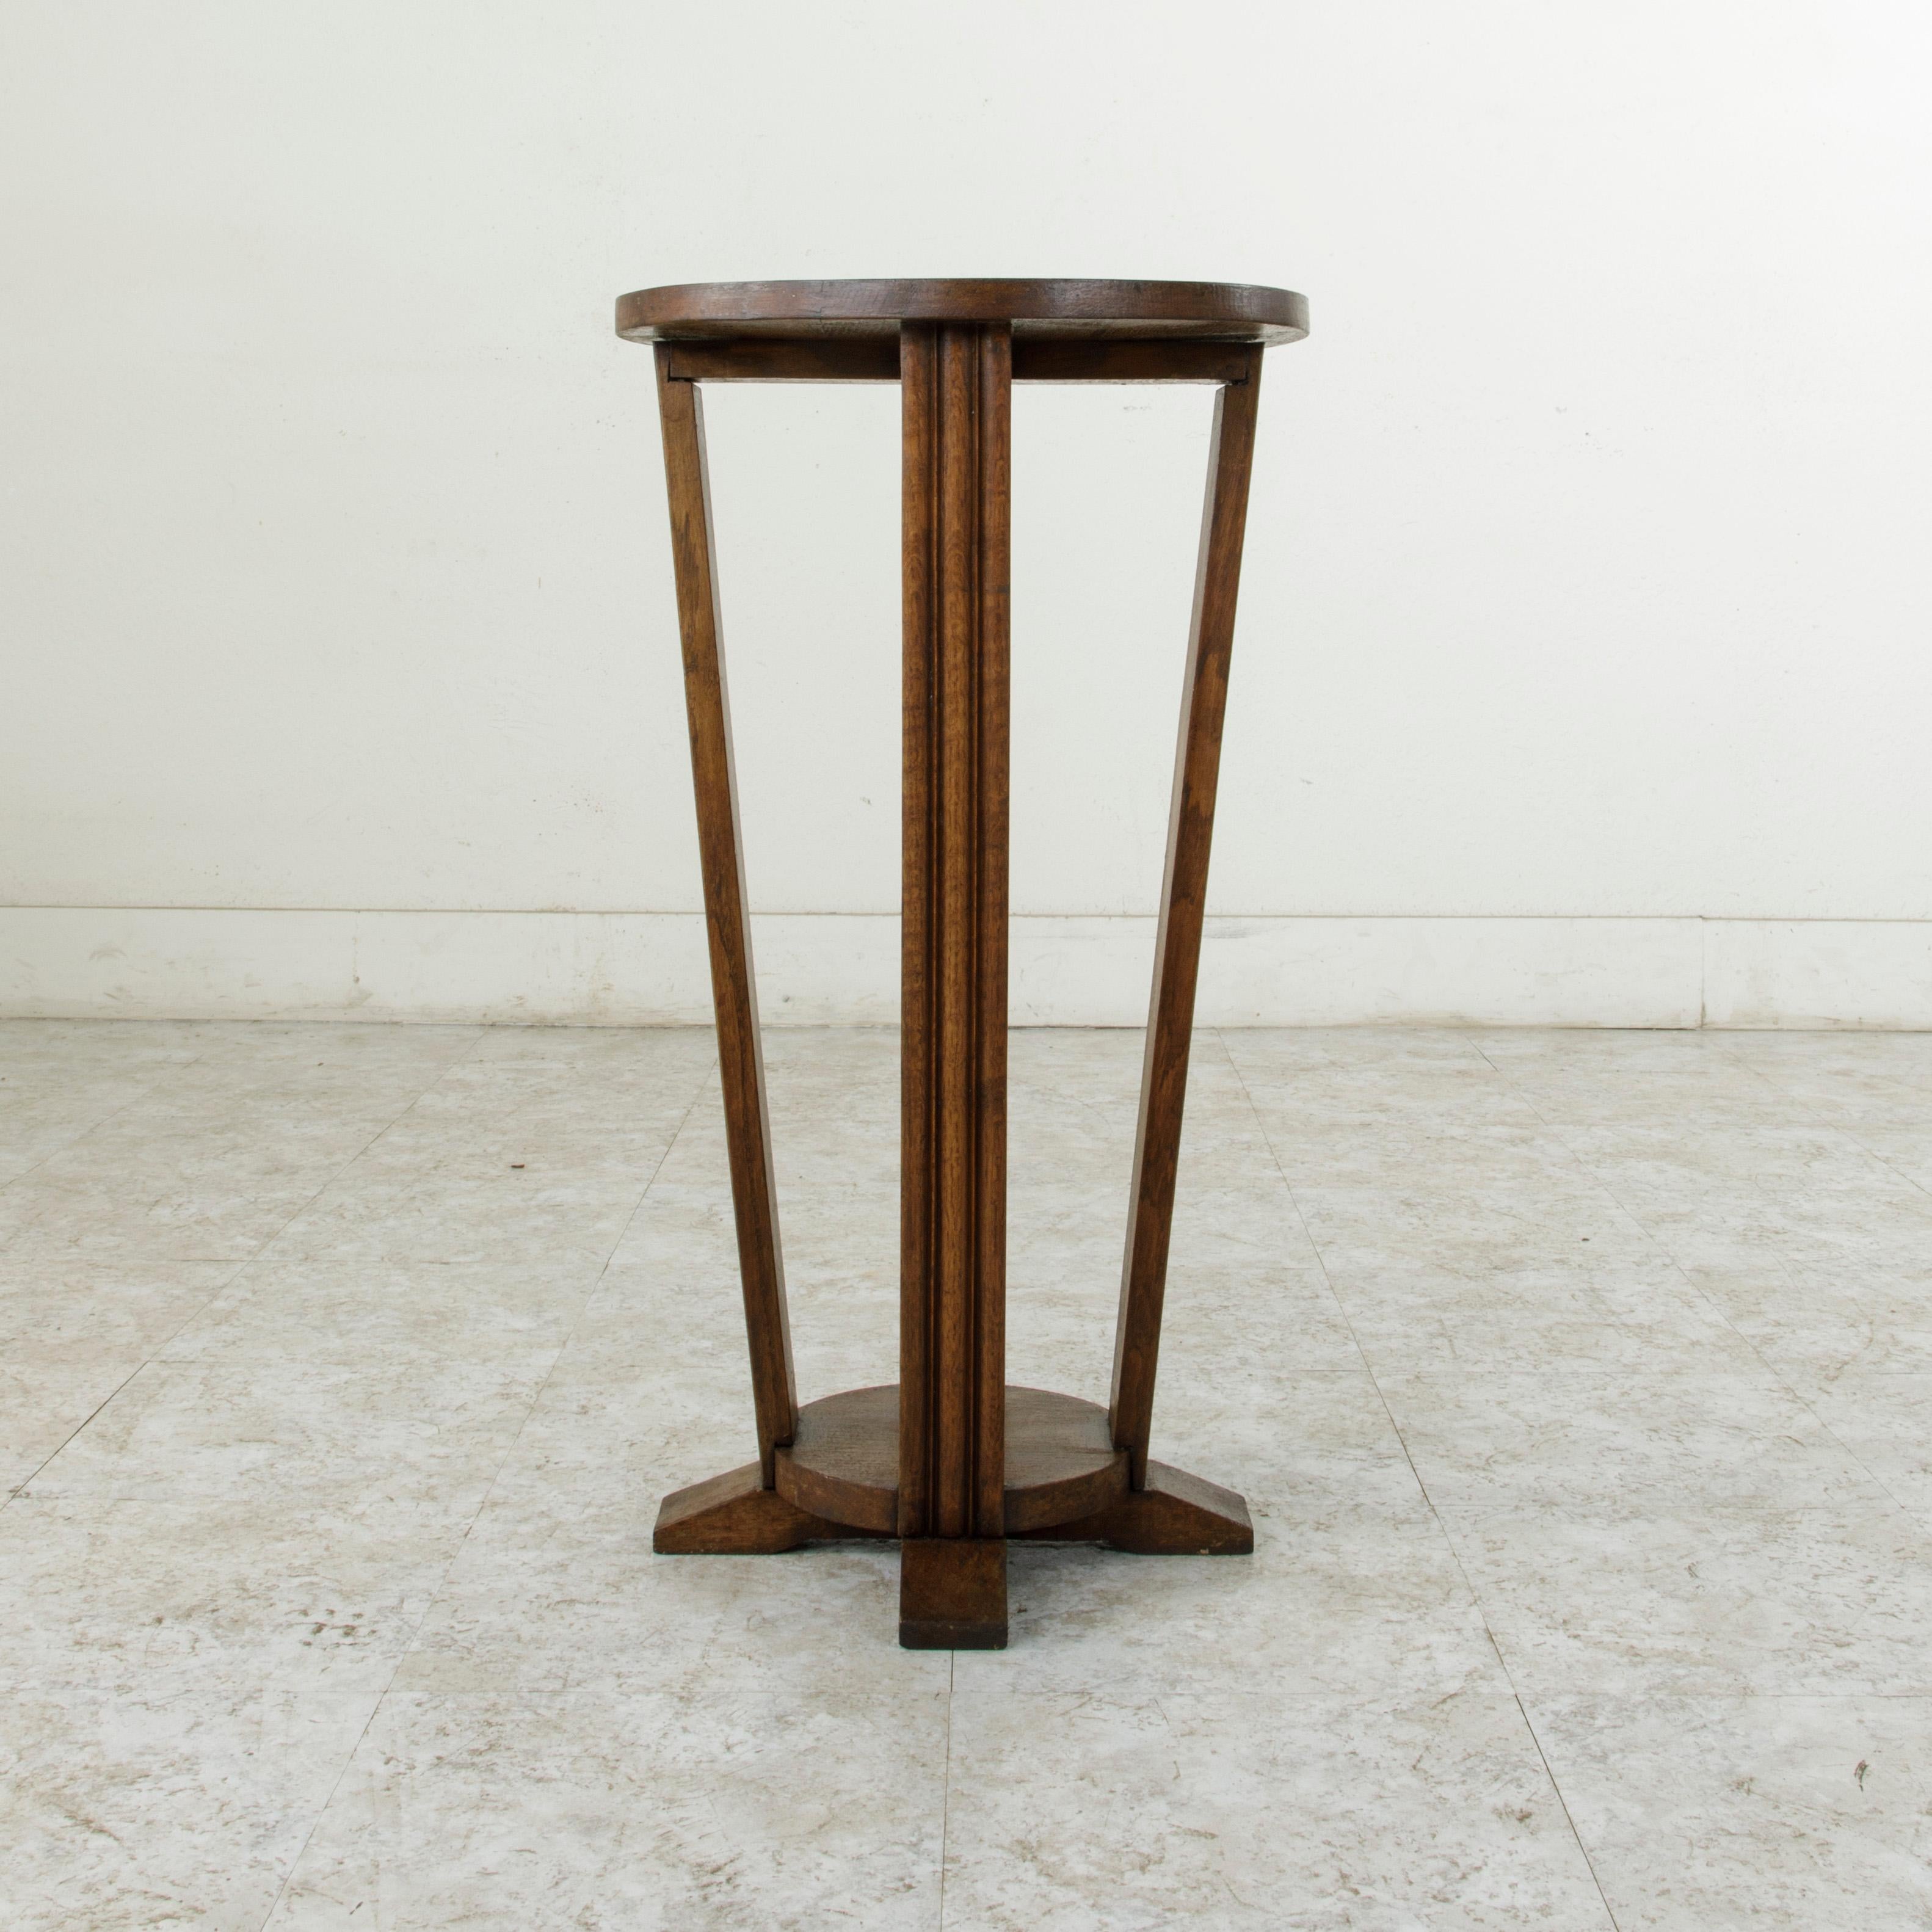 Early 20th Century French Art Deco Period Oak Pedestal, Side Table, Fern Stand (19. Jahrhundert)